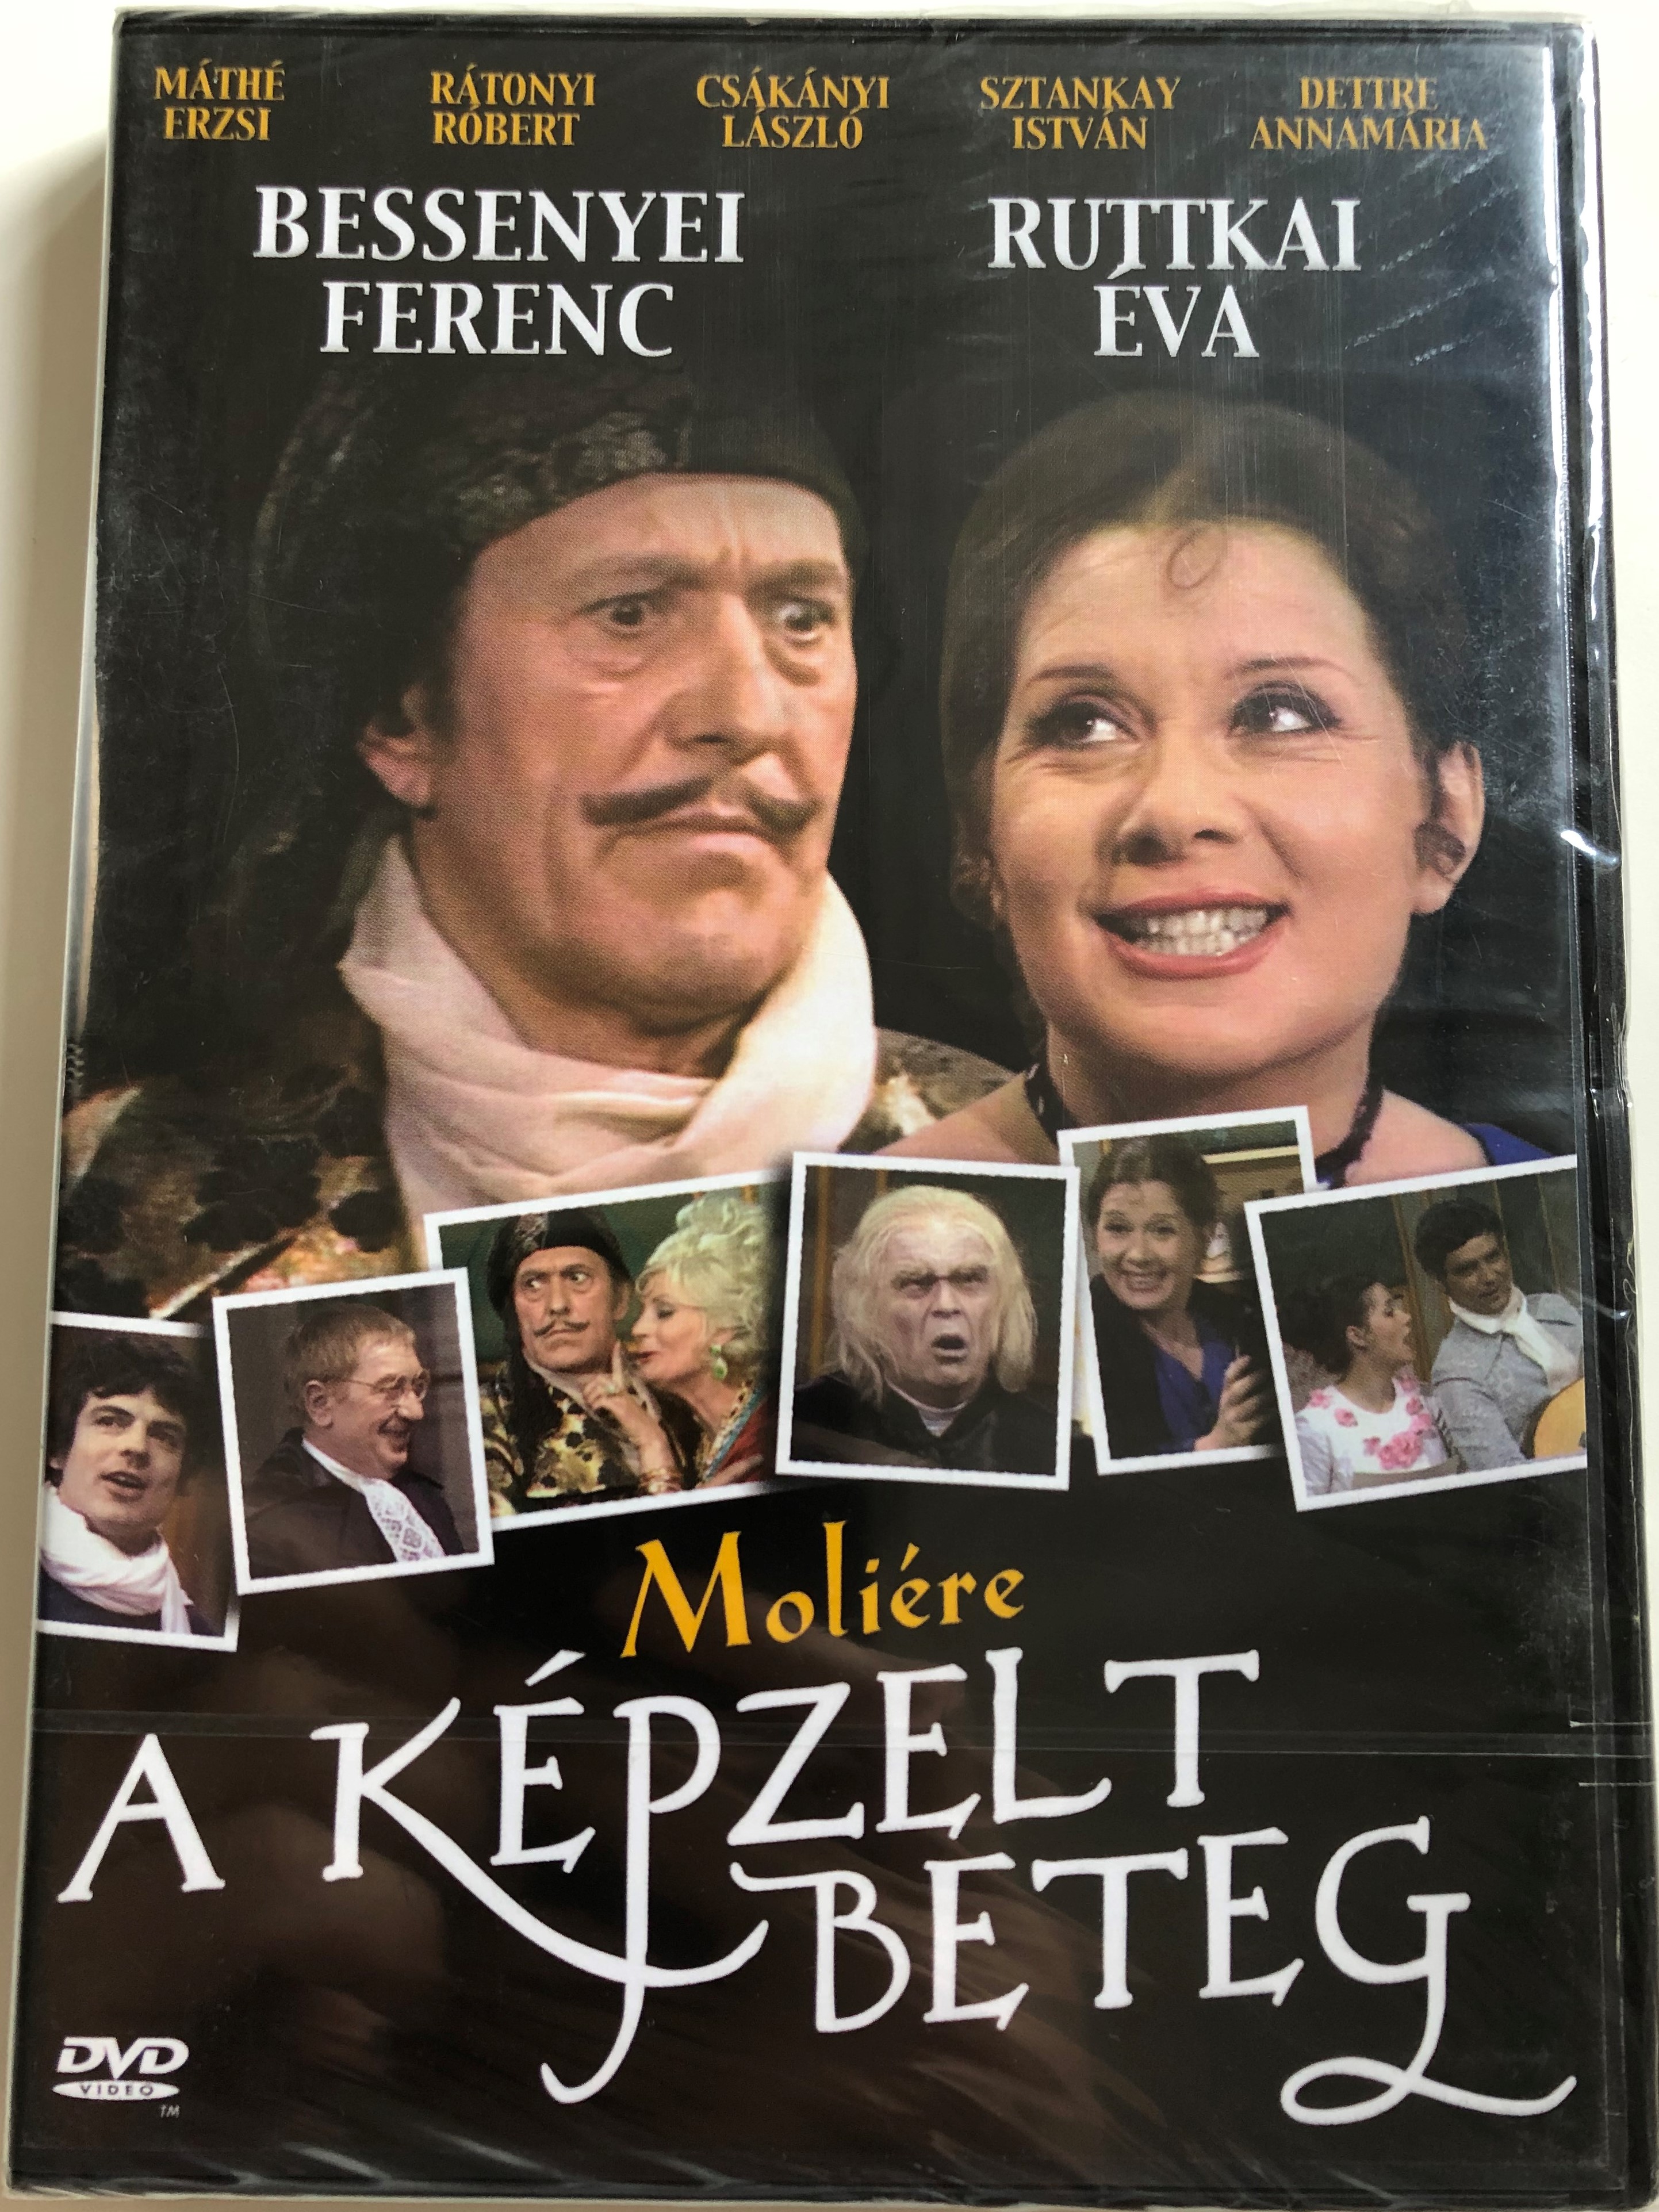 moli-re-a-k-pzelt-beteg-dvd-1971-hungarian-theatre-play-1.jpg